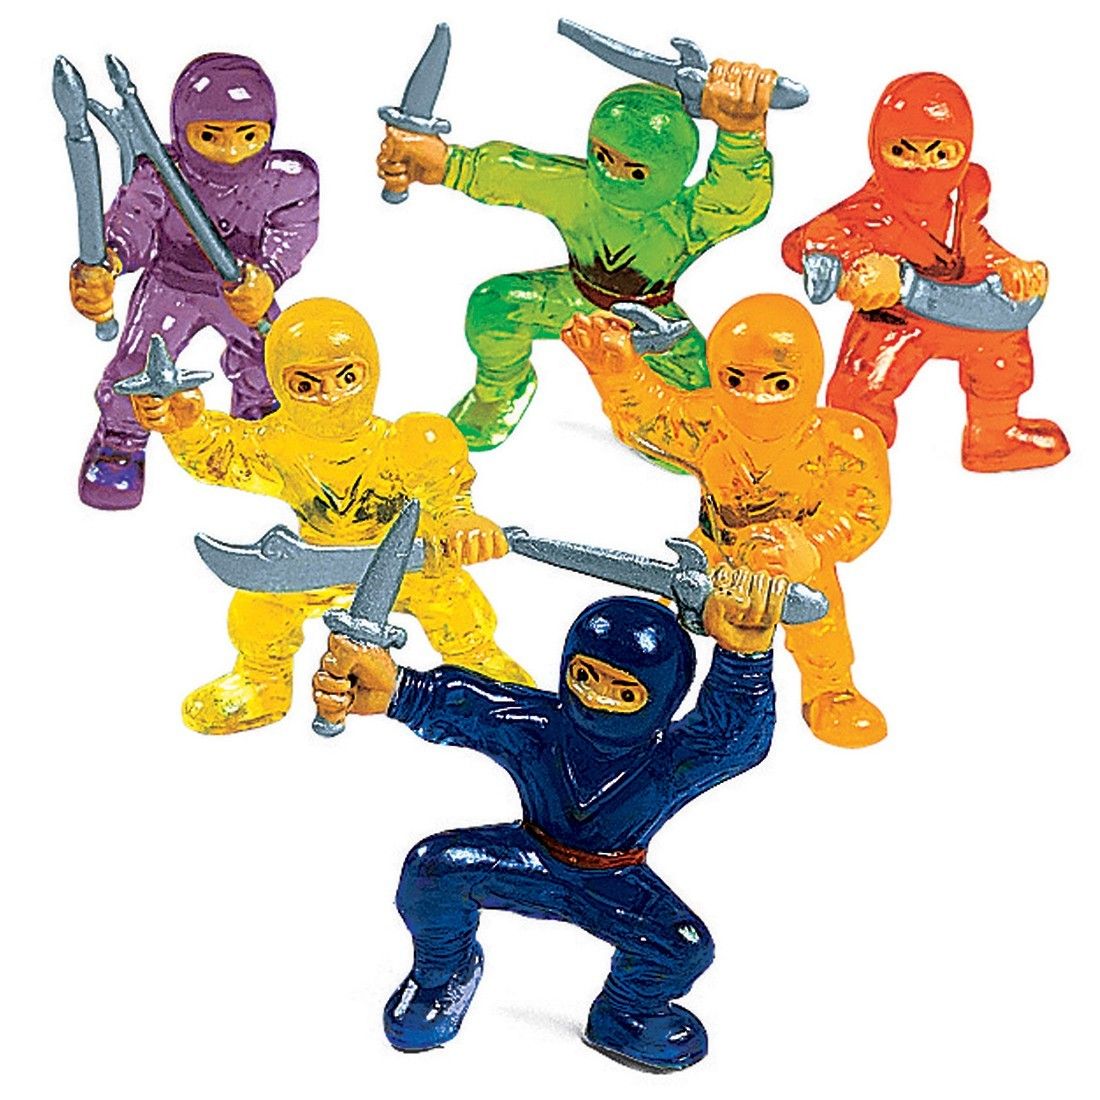 Ninja Figurines from SmileMakers